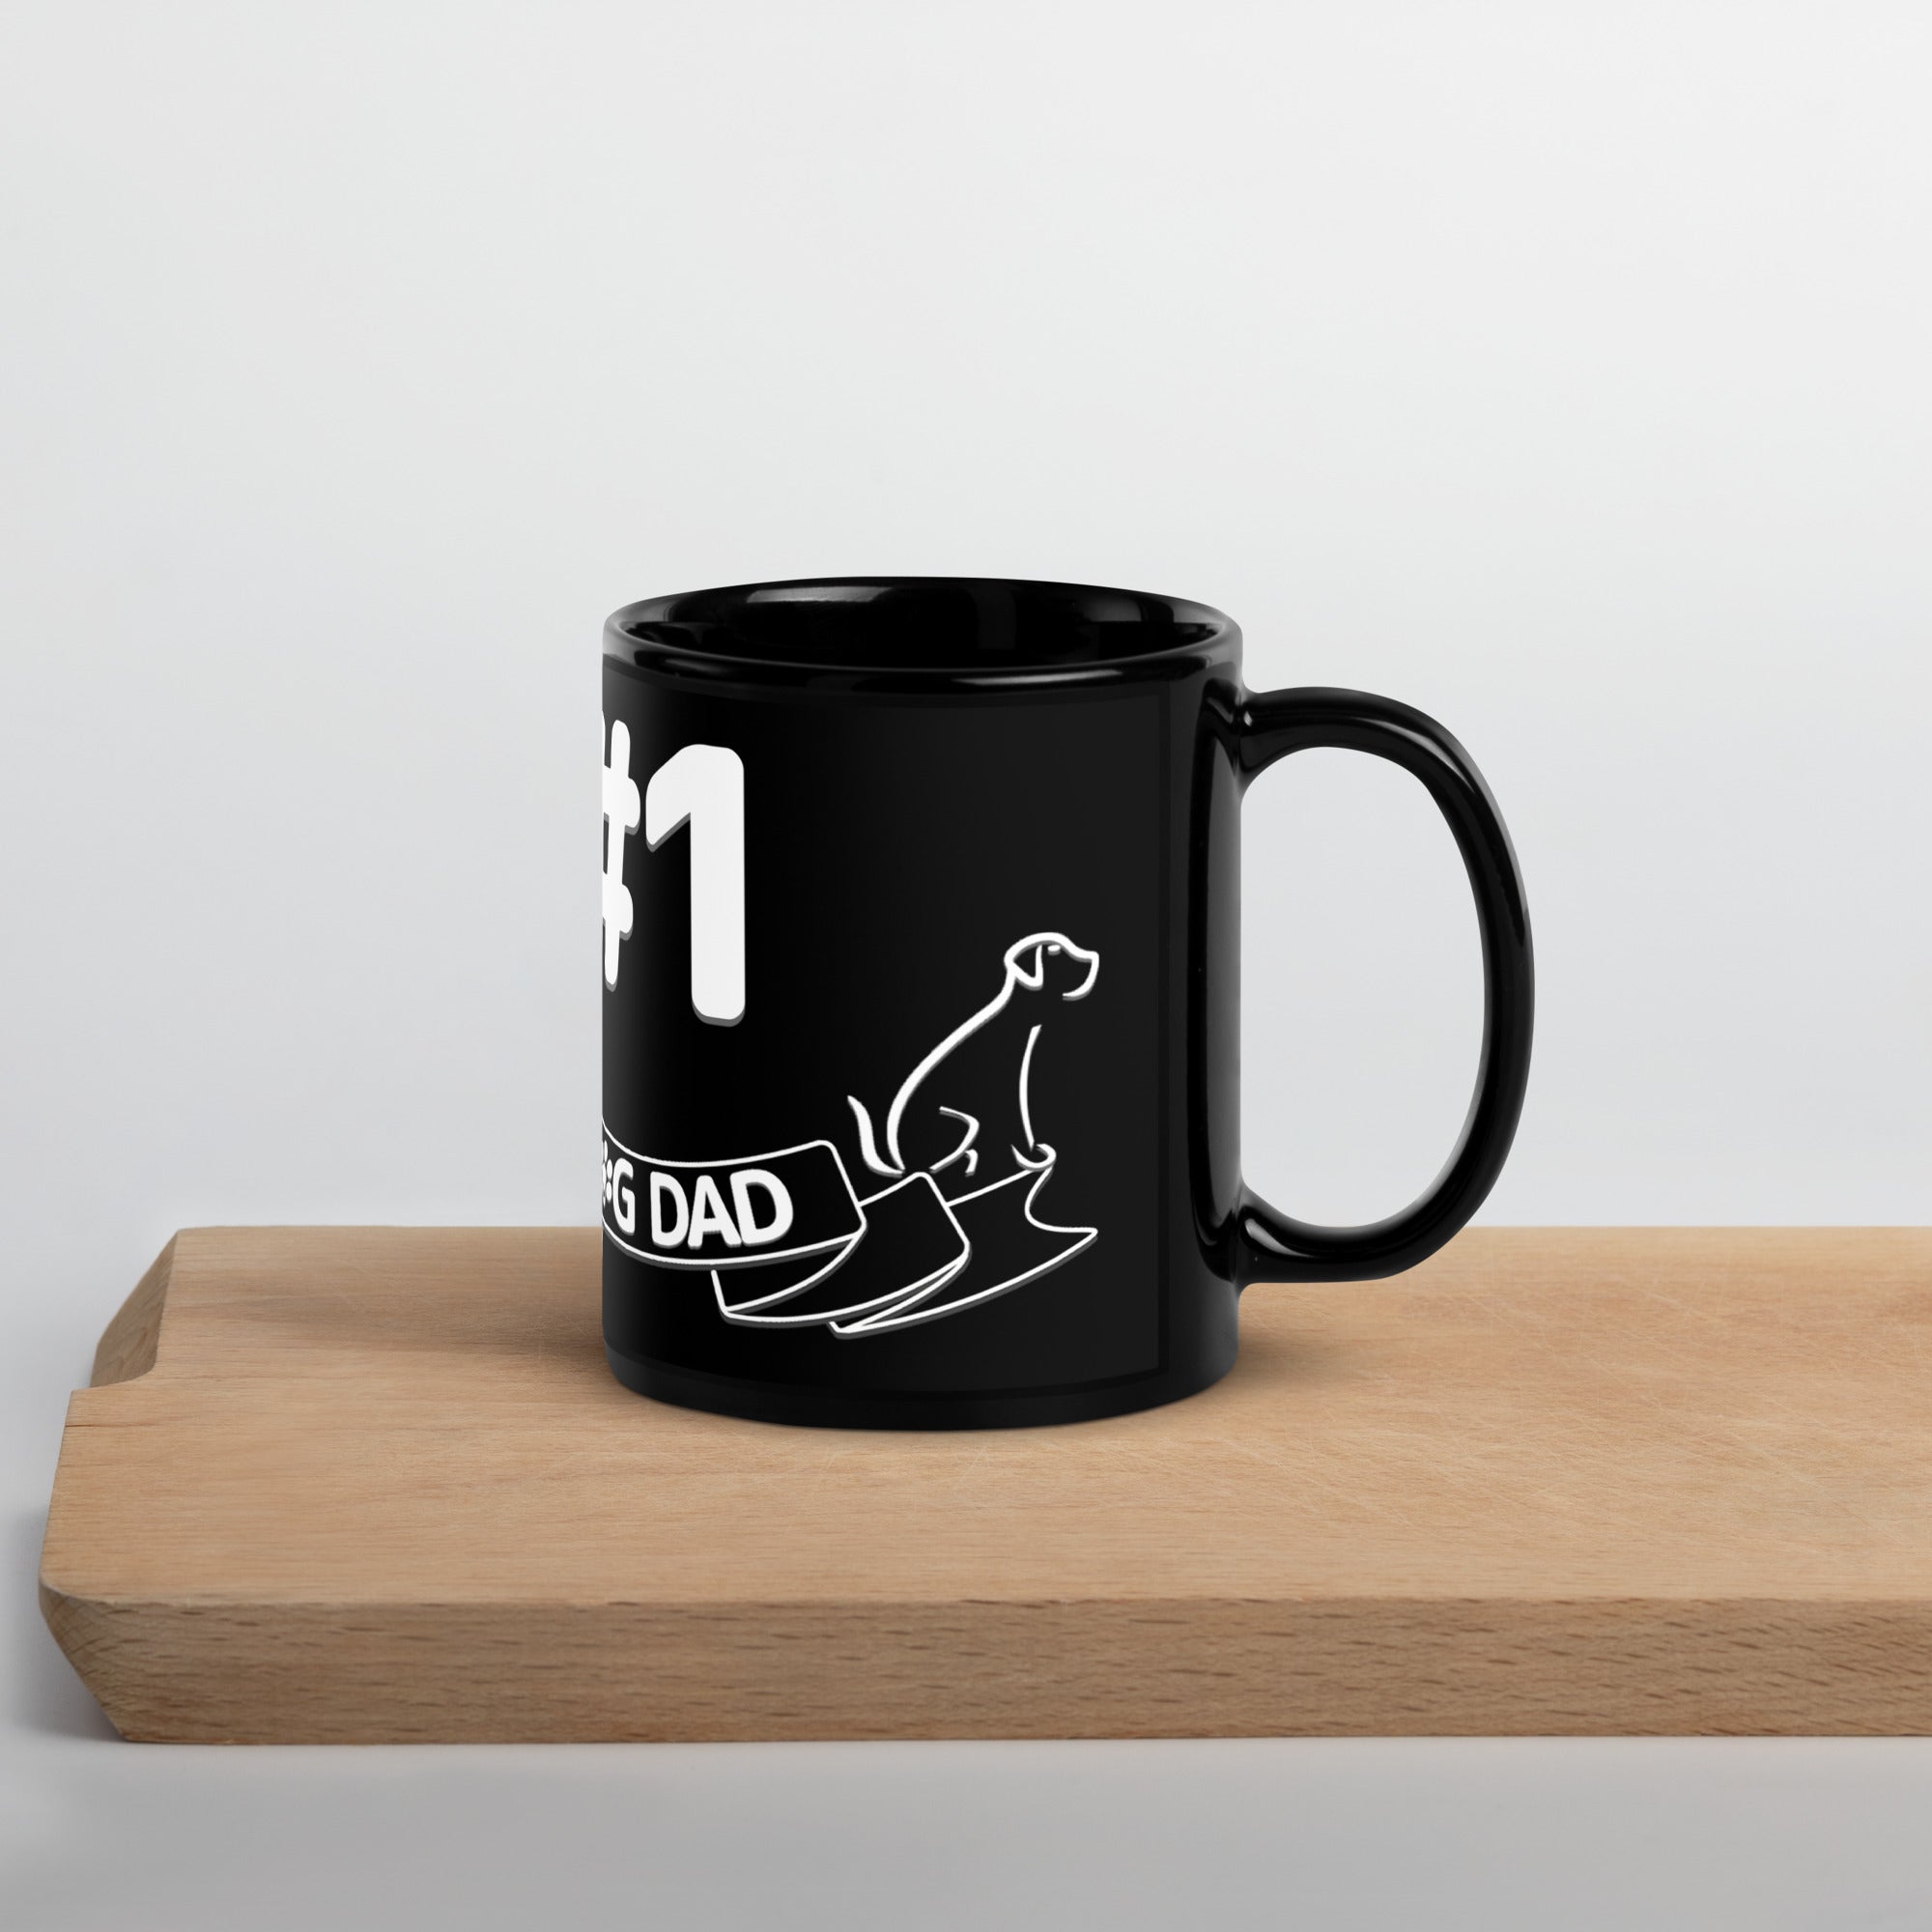 #1 Dog Dad Black Glossy Mug